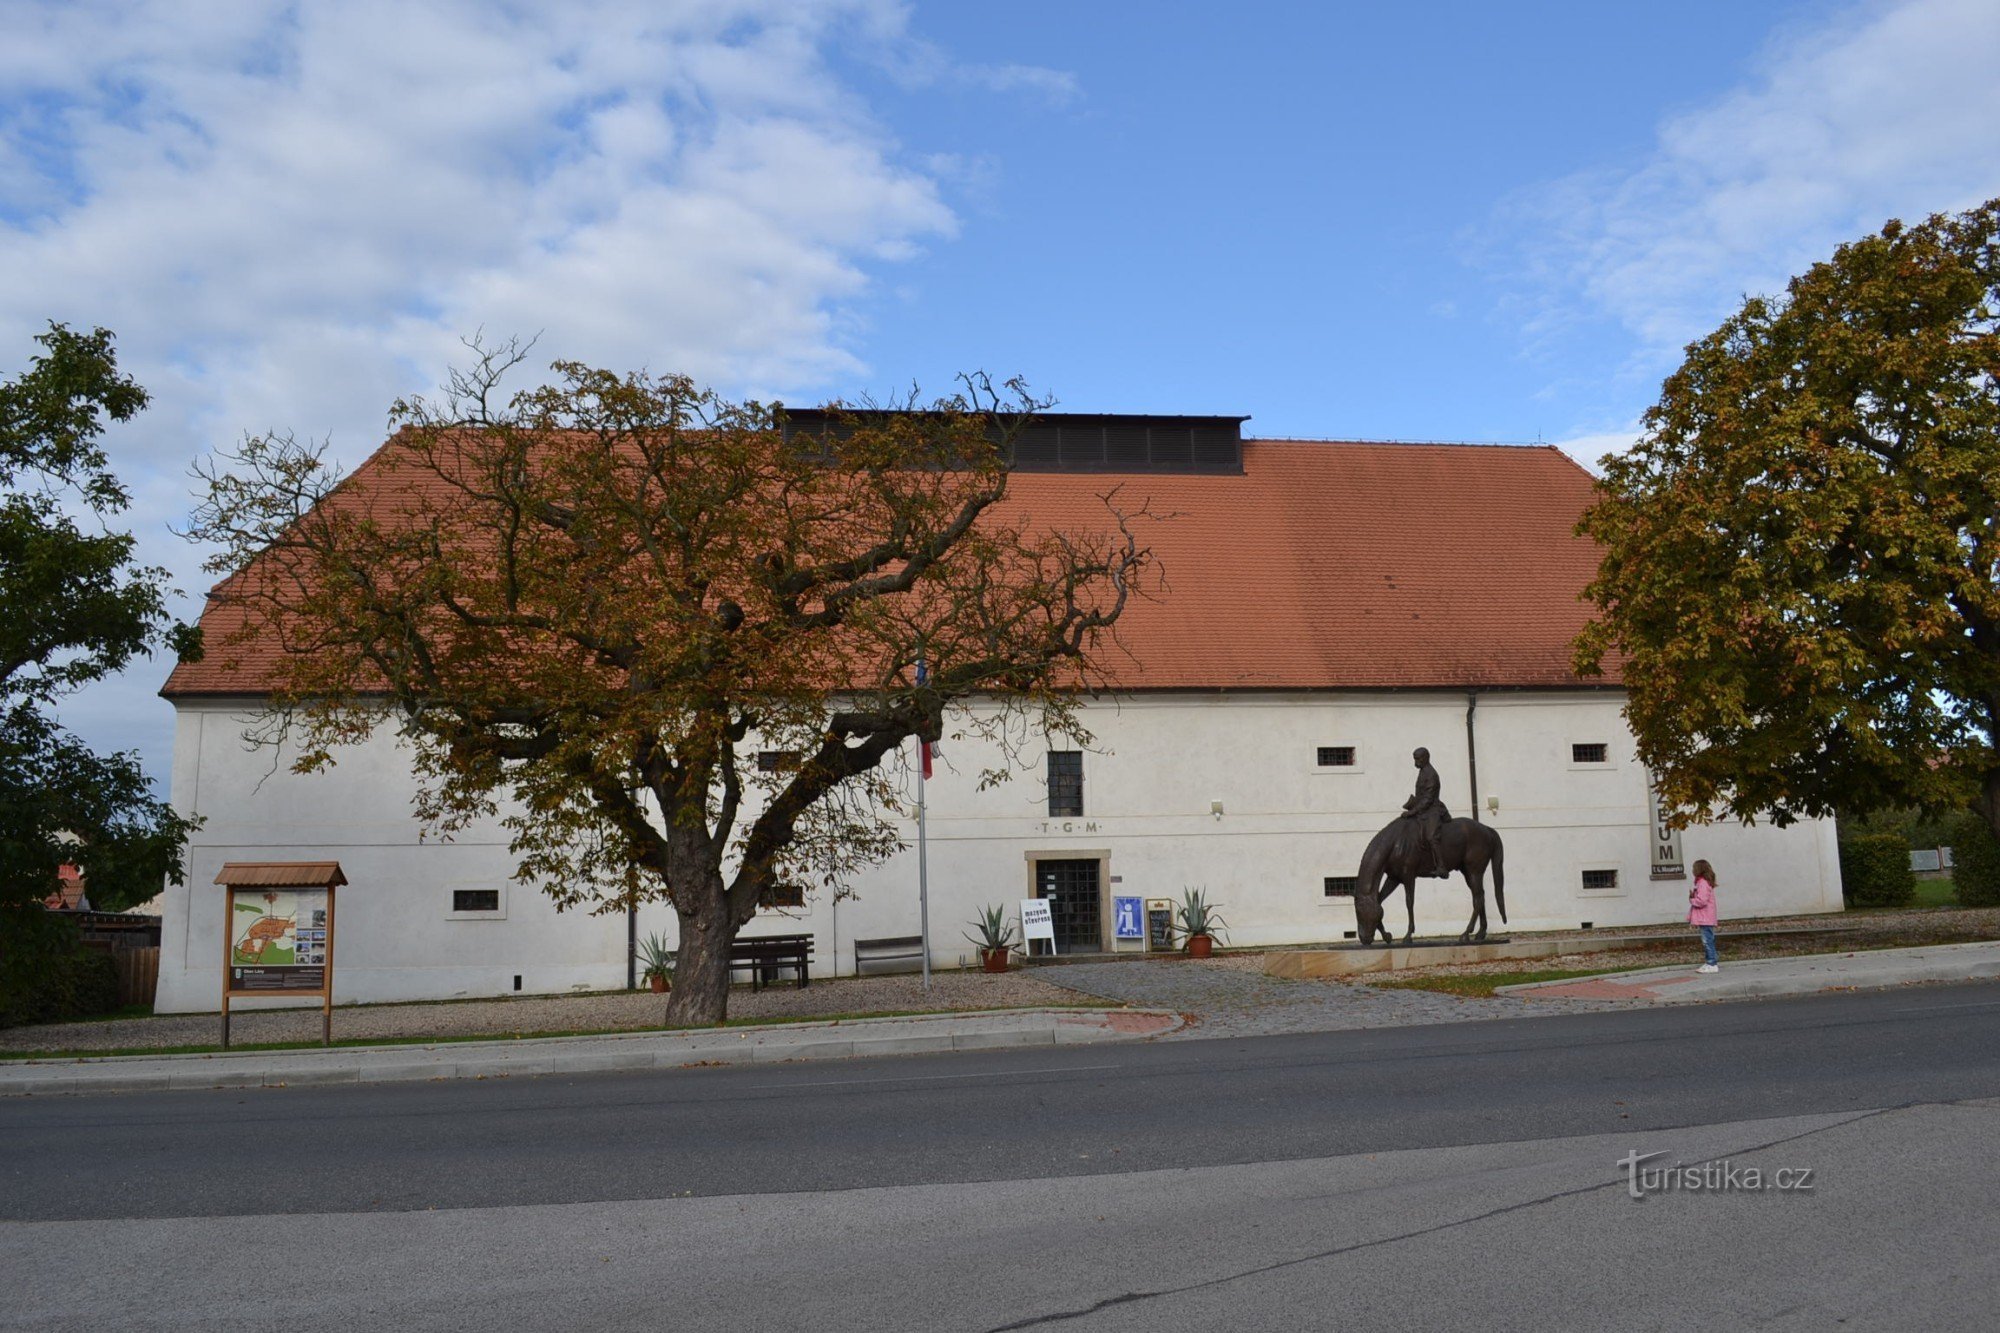 TGMasaryk Museum